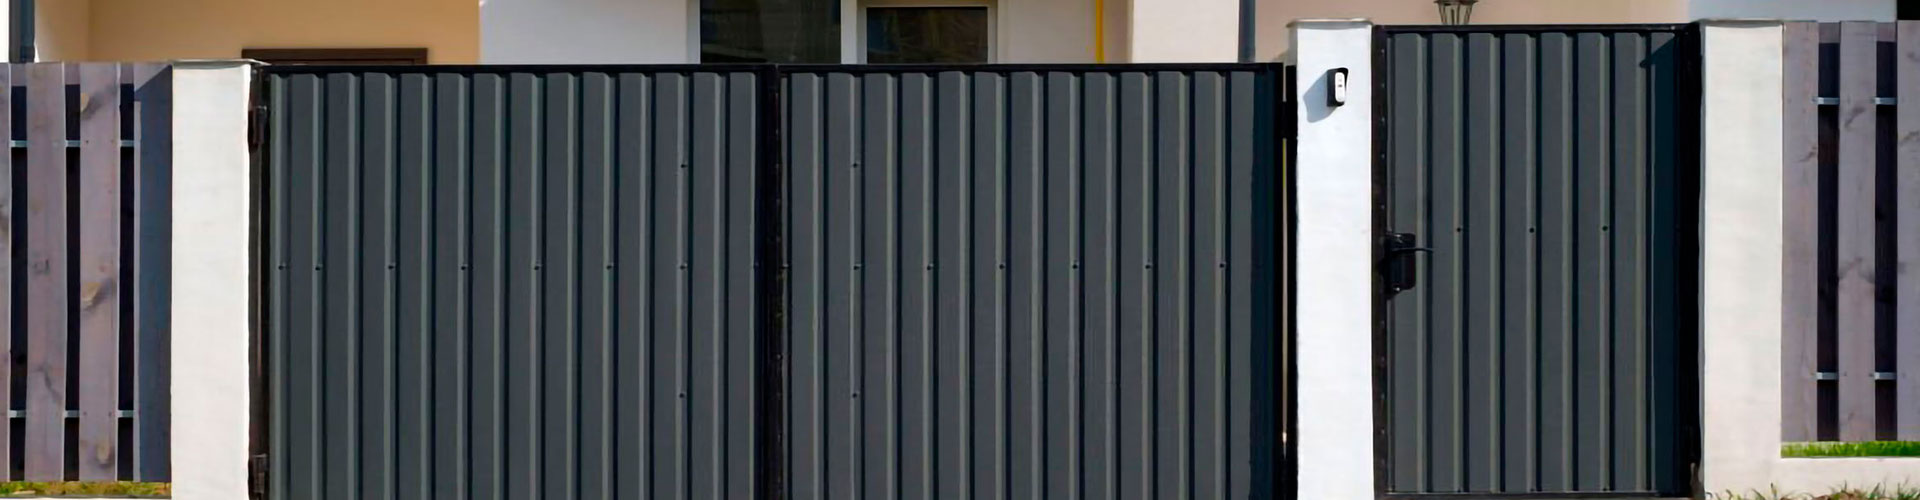 Puertas de hierro para exteriores que modernizan tu entrada